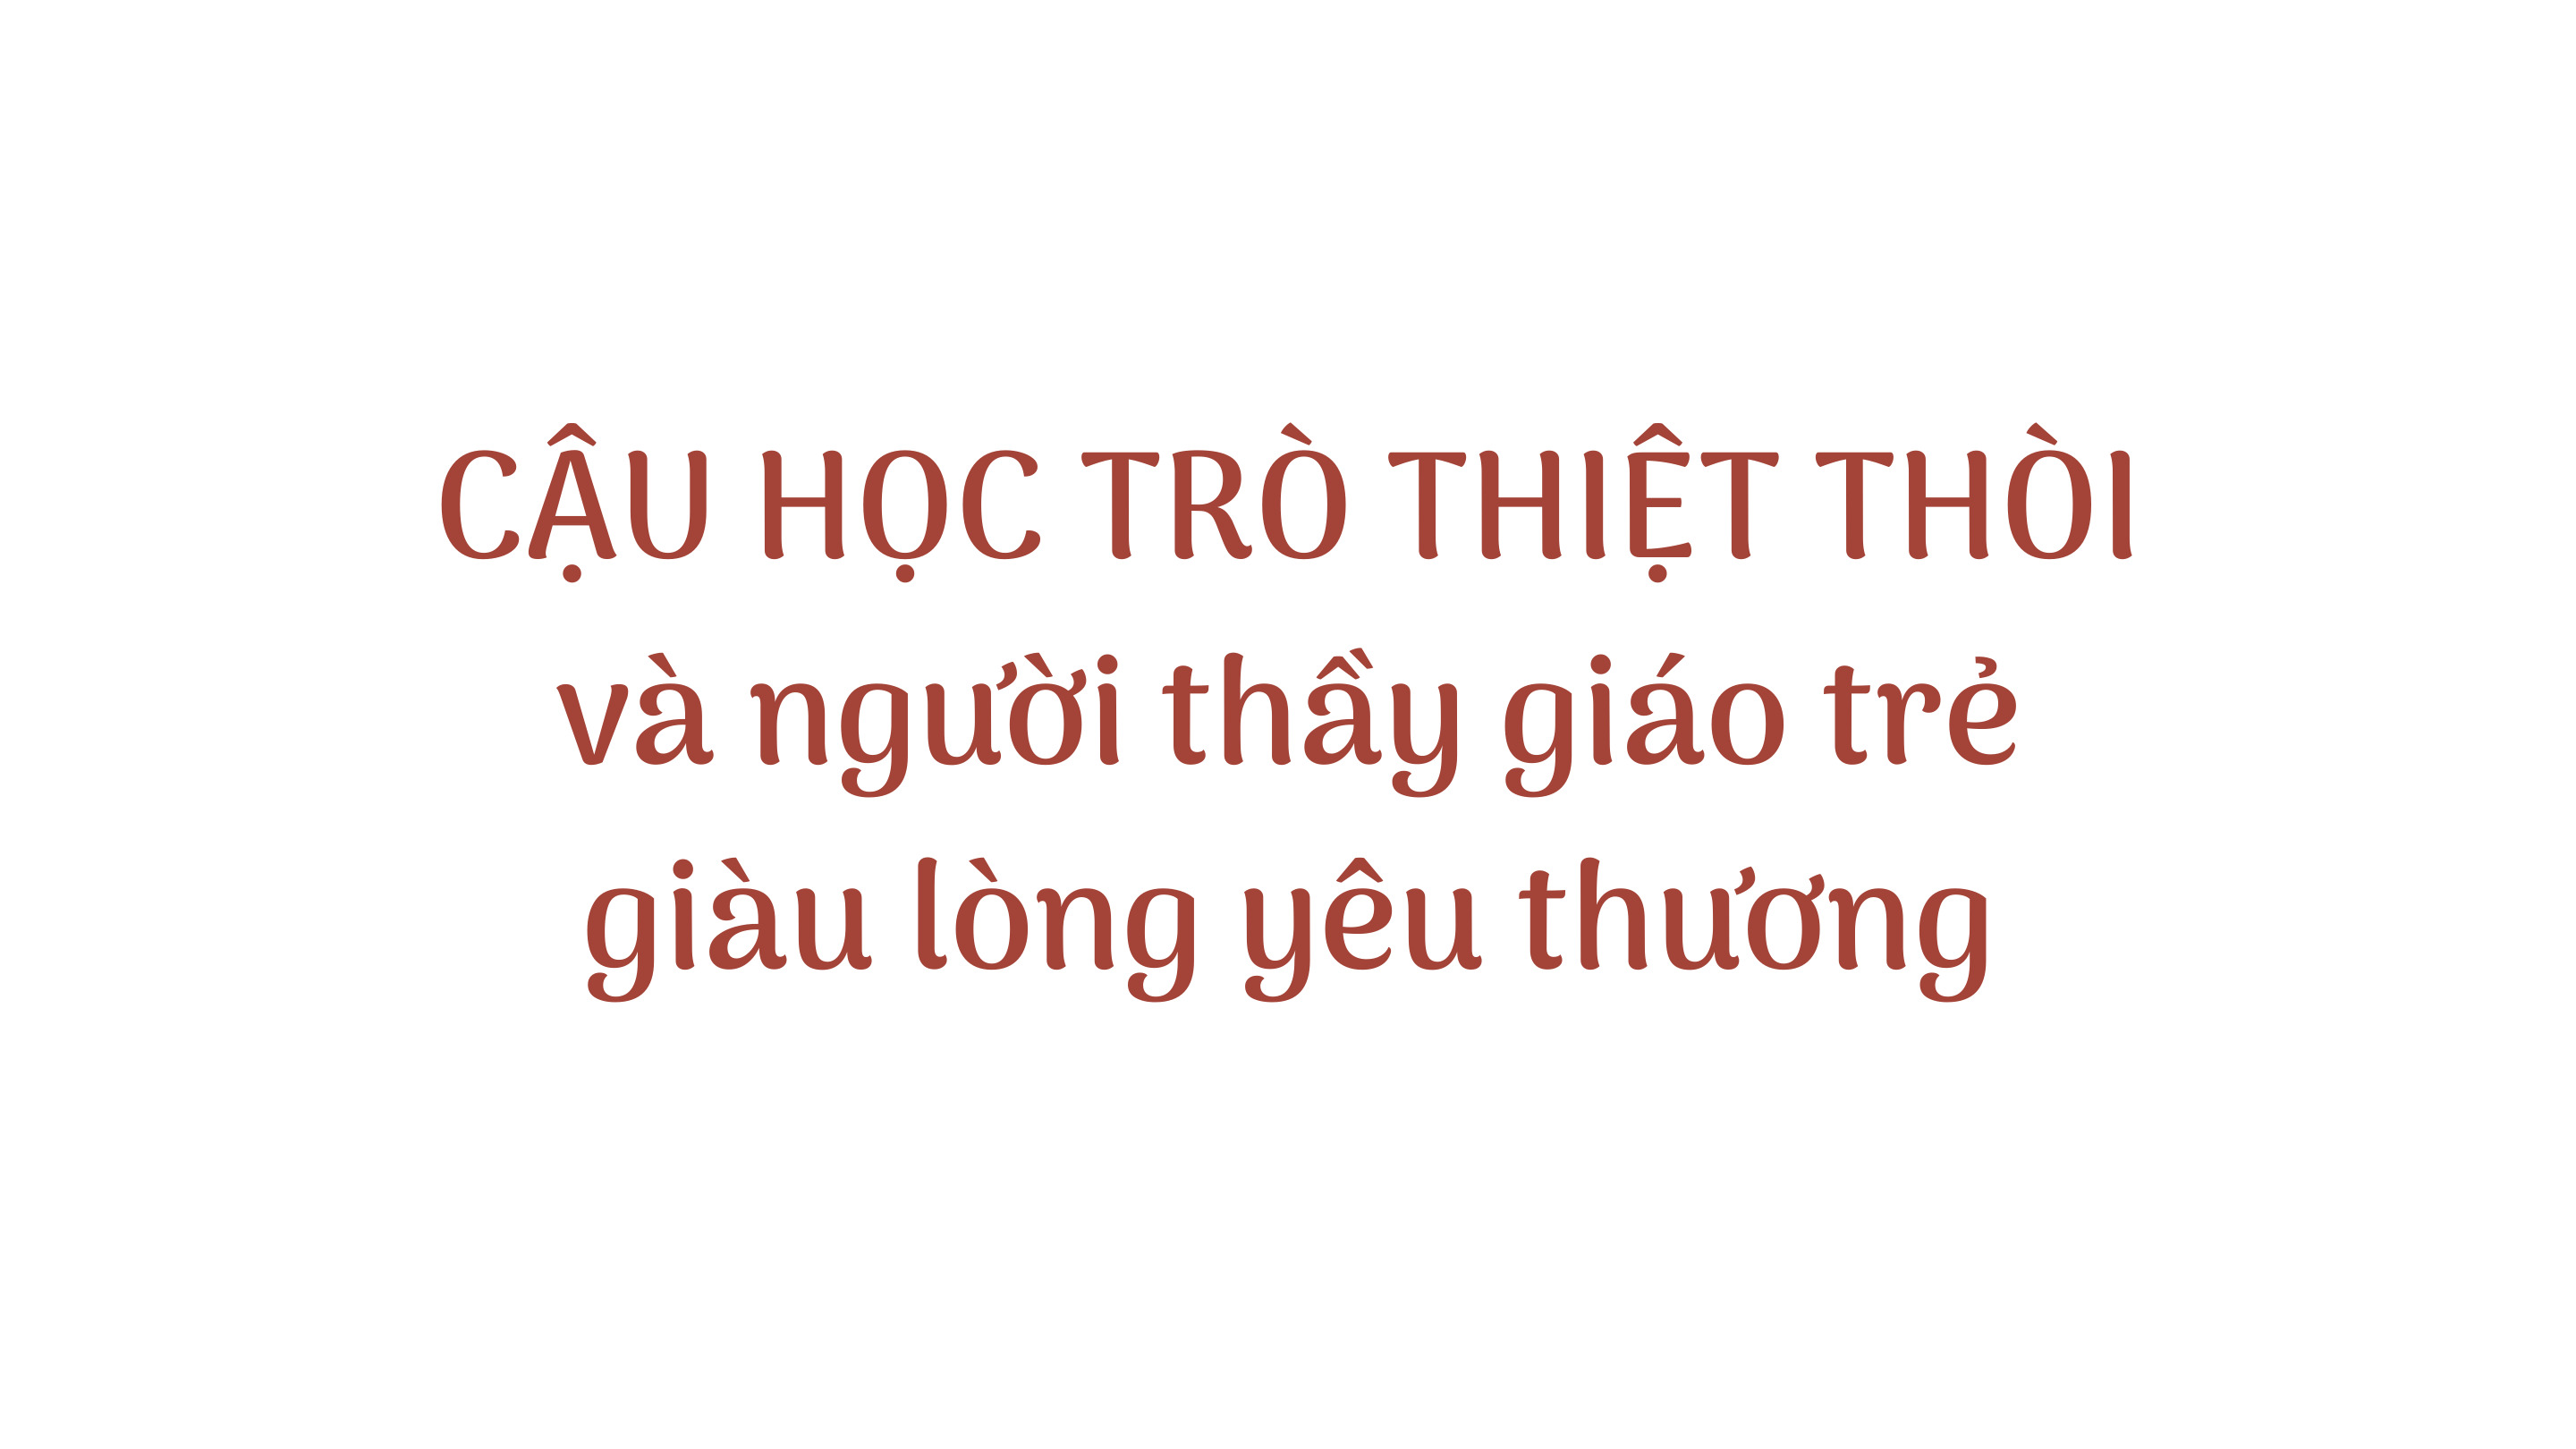 Copy of truong hoc hanh phuc ha noi (2)